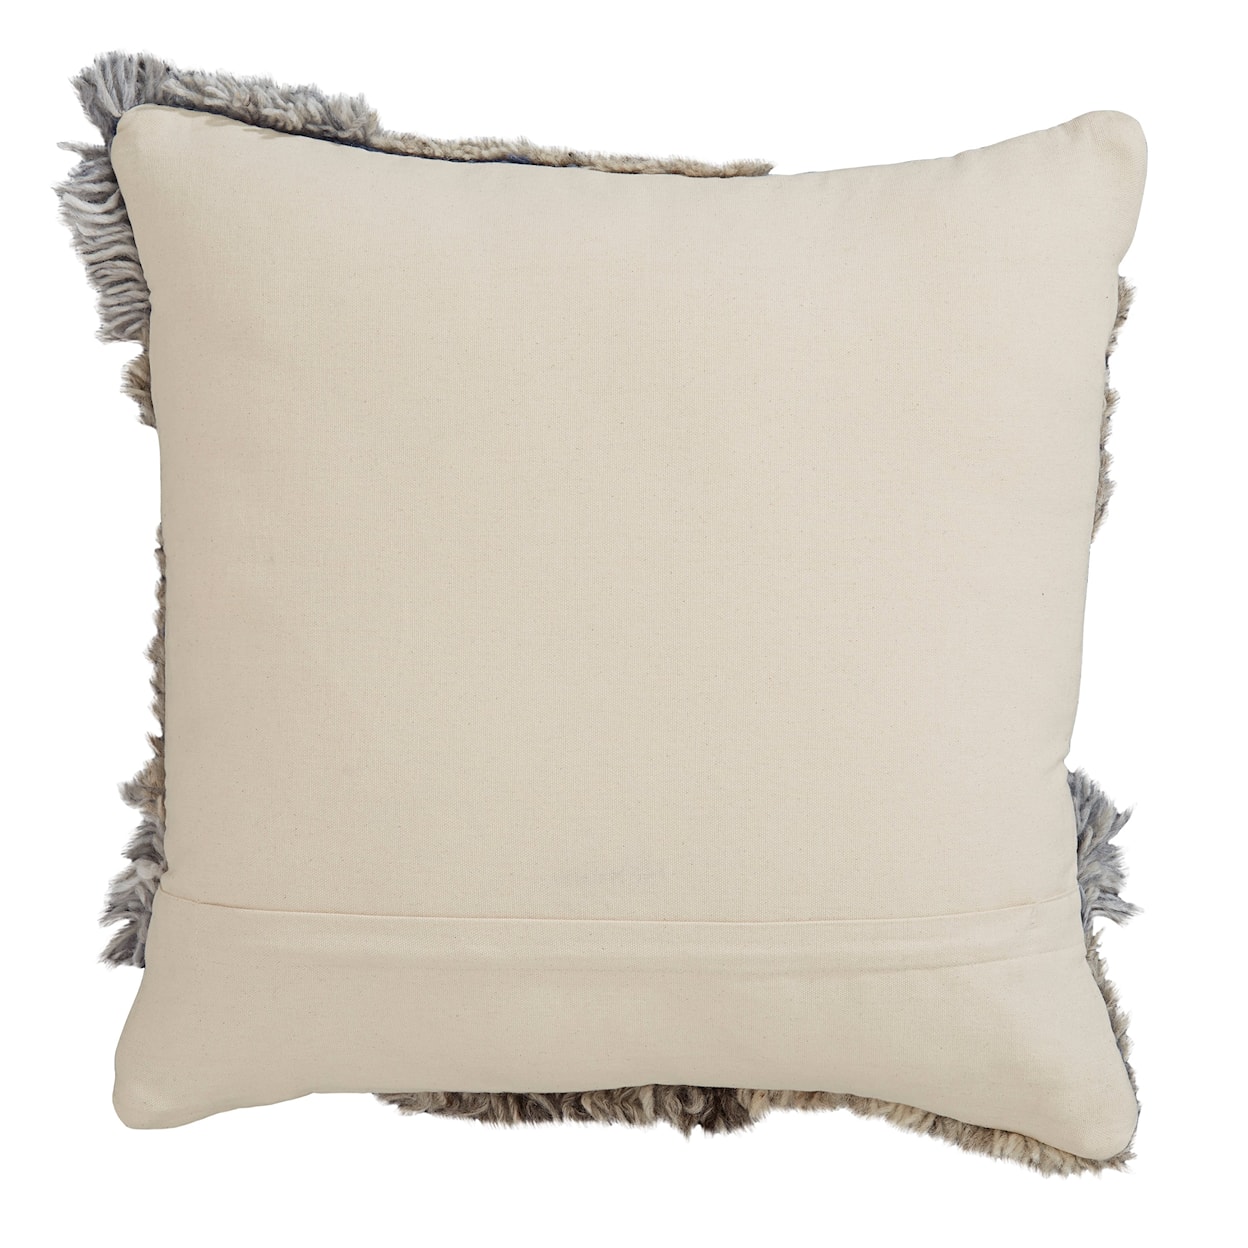 Ashley Furniture Signature Design Gibbend Gibbend Blue/Gray/White Pillow